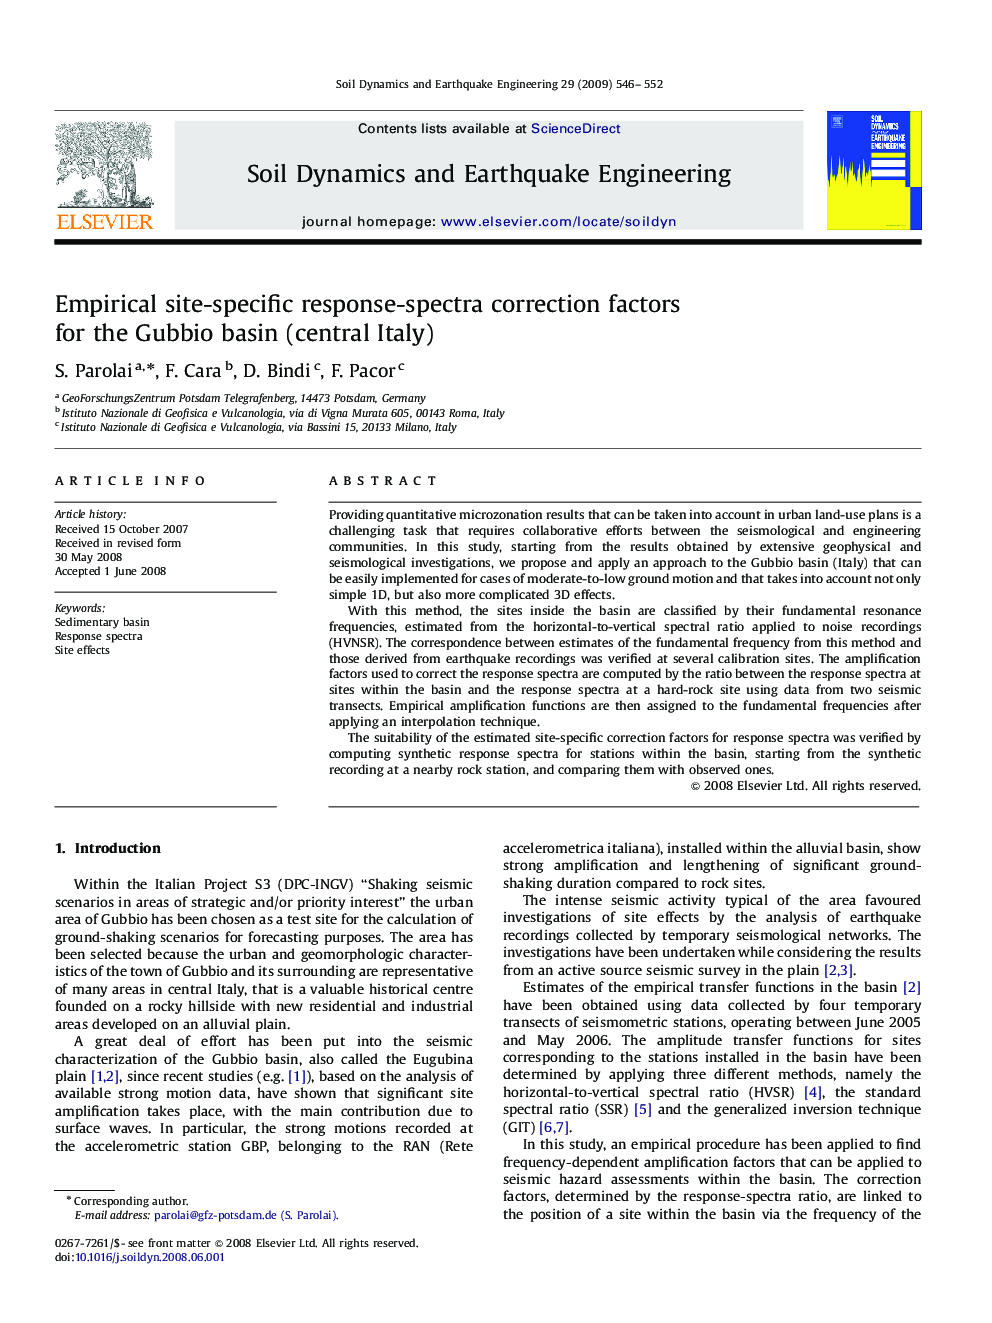 Empirical site-specific response-spectra correction factors for the Gubbio basin (central Italy)